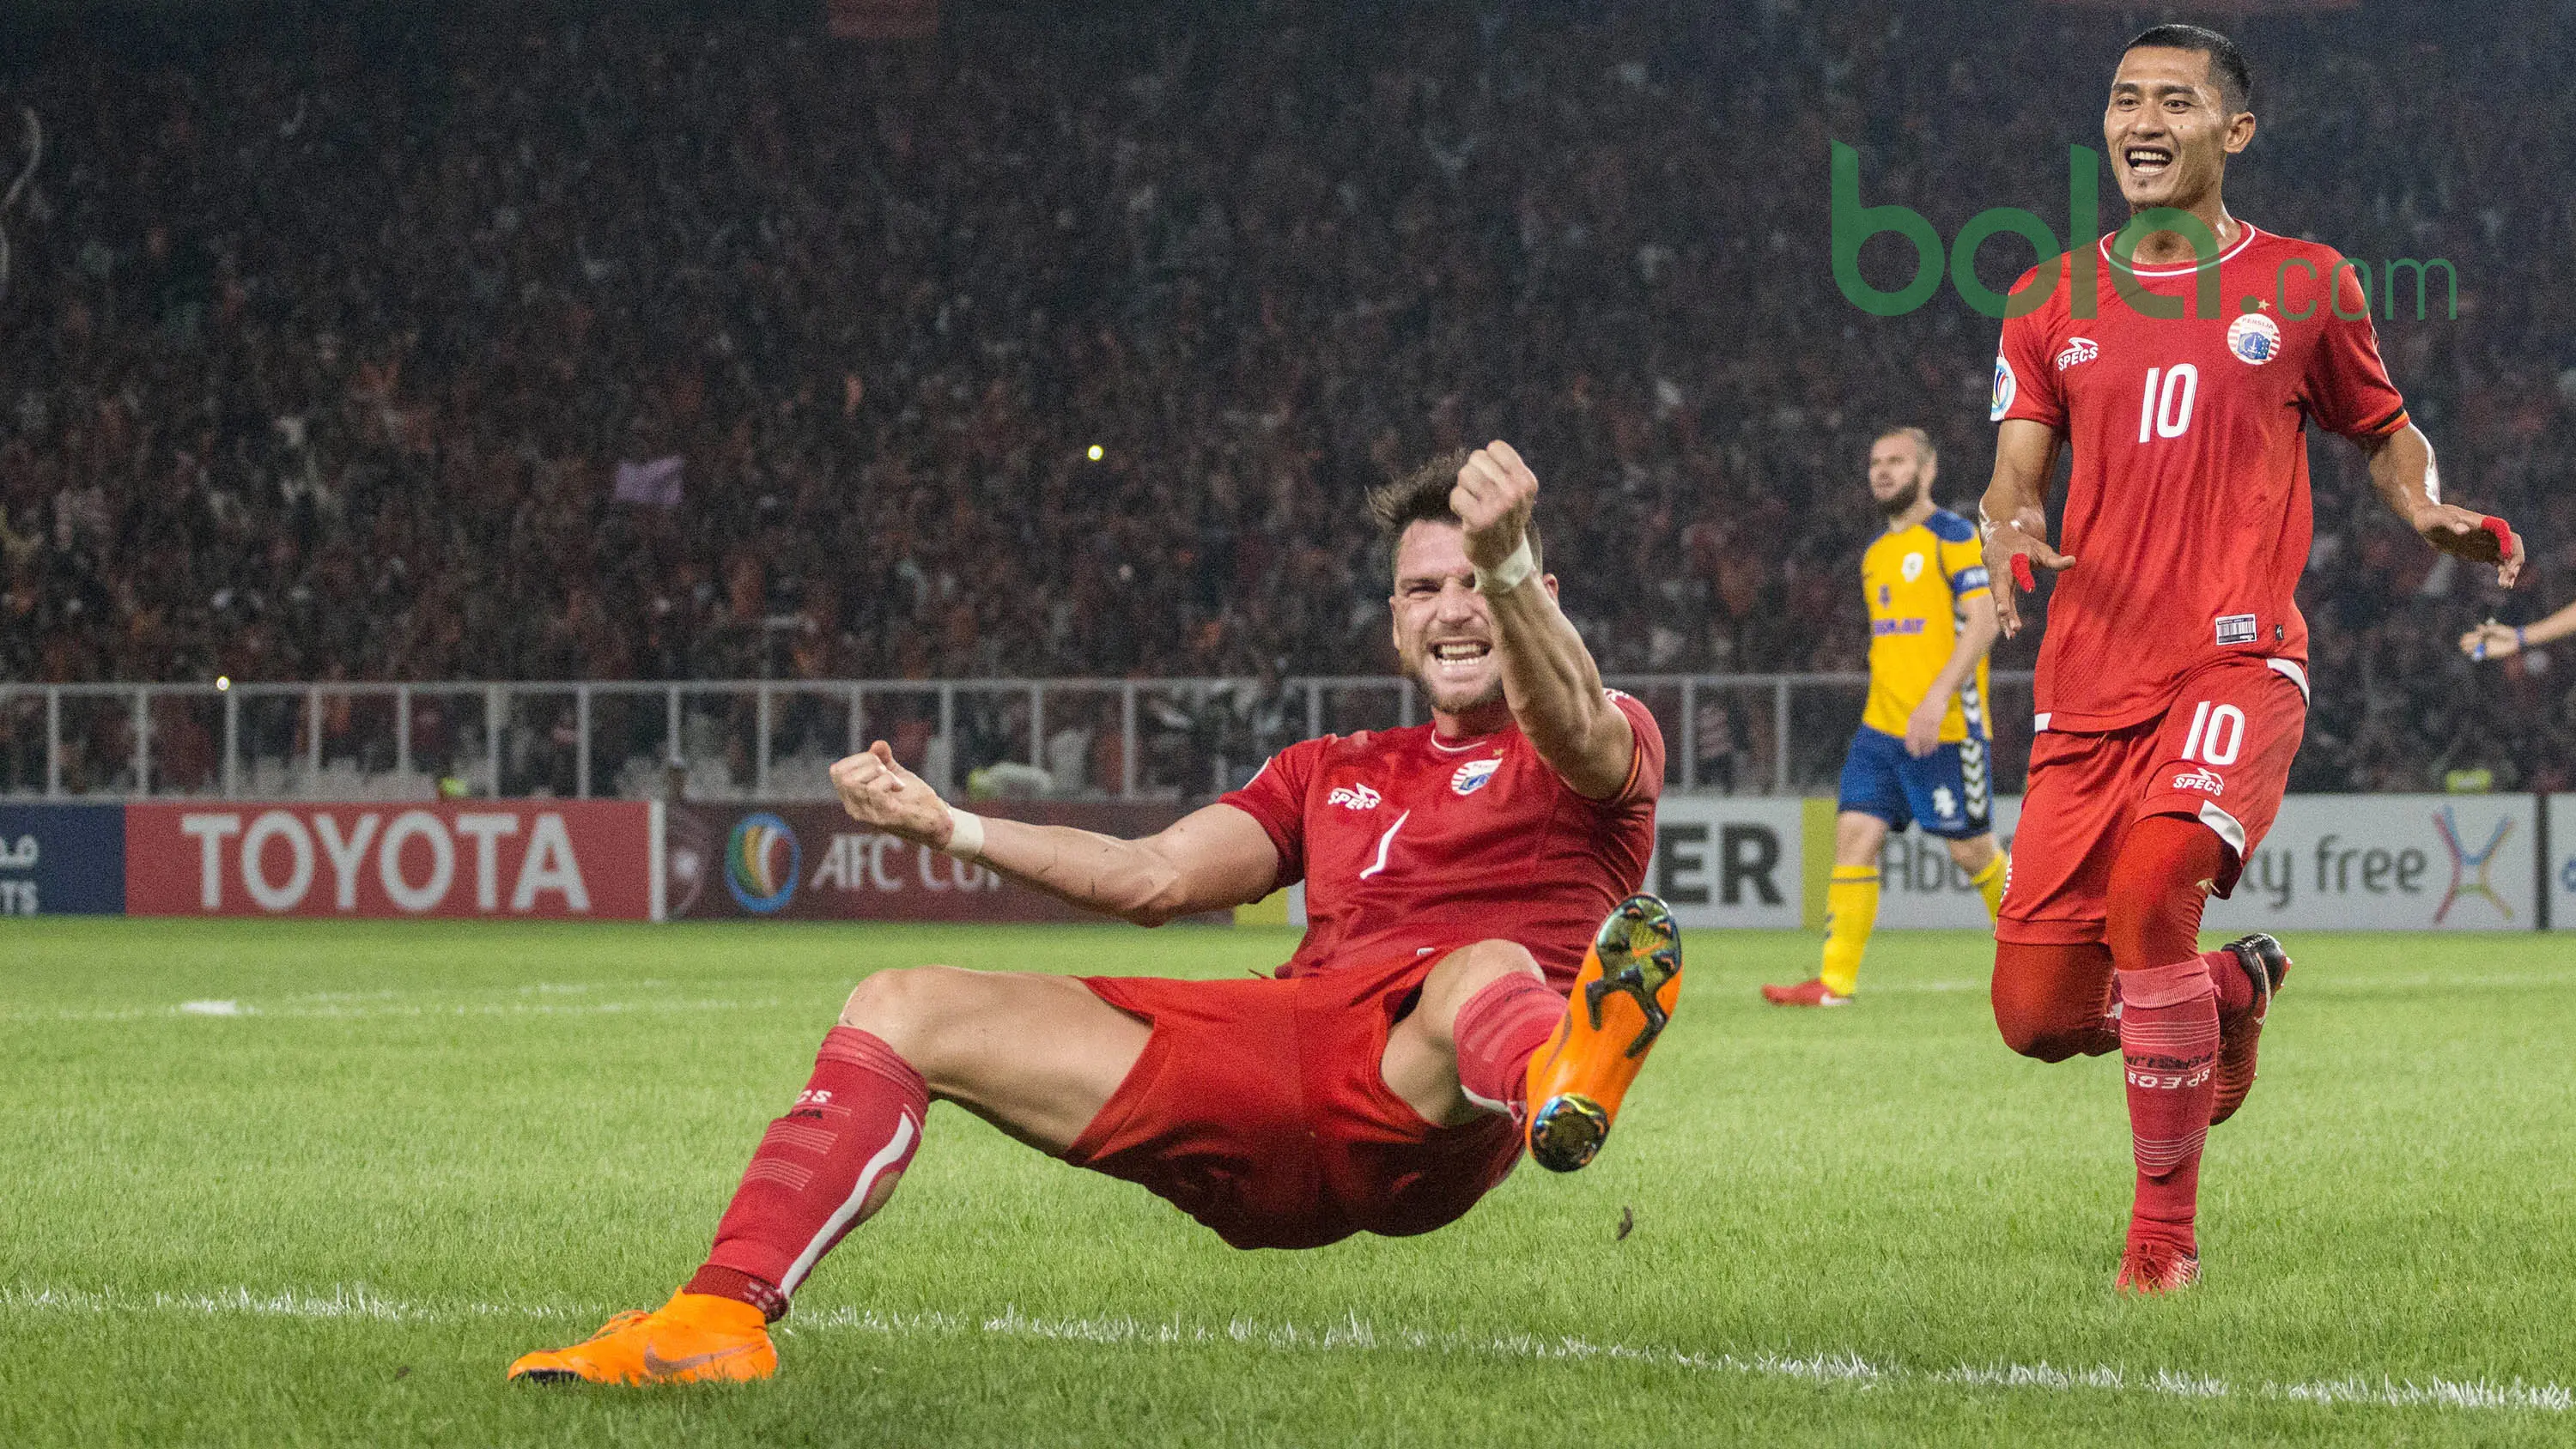 Marko Simic merayakan gol bersama Rudi Widodo saat melawan Tampines Rovers pada laga Piala AFC 2018 di Stadion Utama GBK, Senayan, Jakarta (28/2/2018). Simic mencetak tiga gol untuk Persija. (Bola.com/Asprilla Dwi Adha)